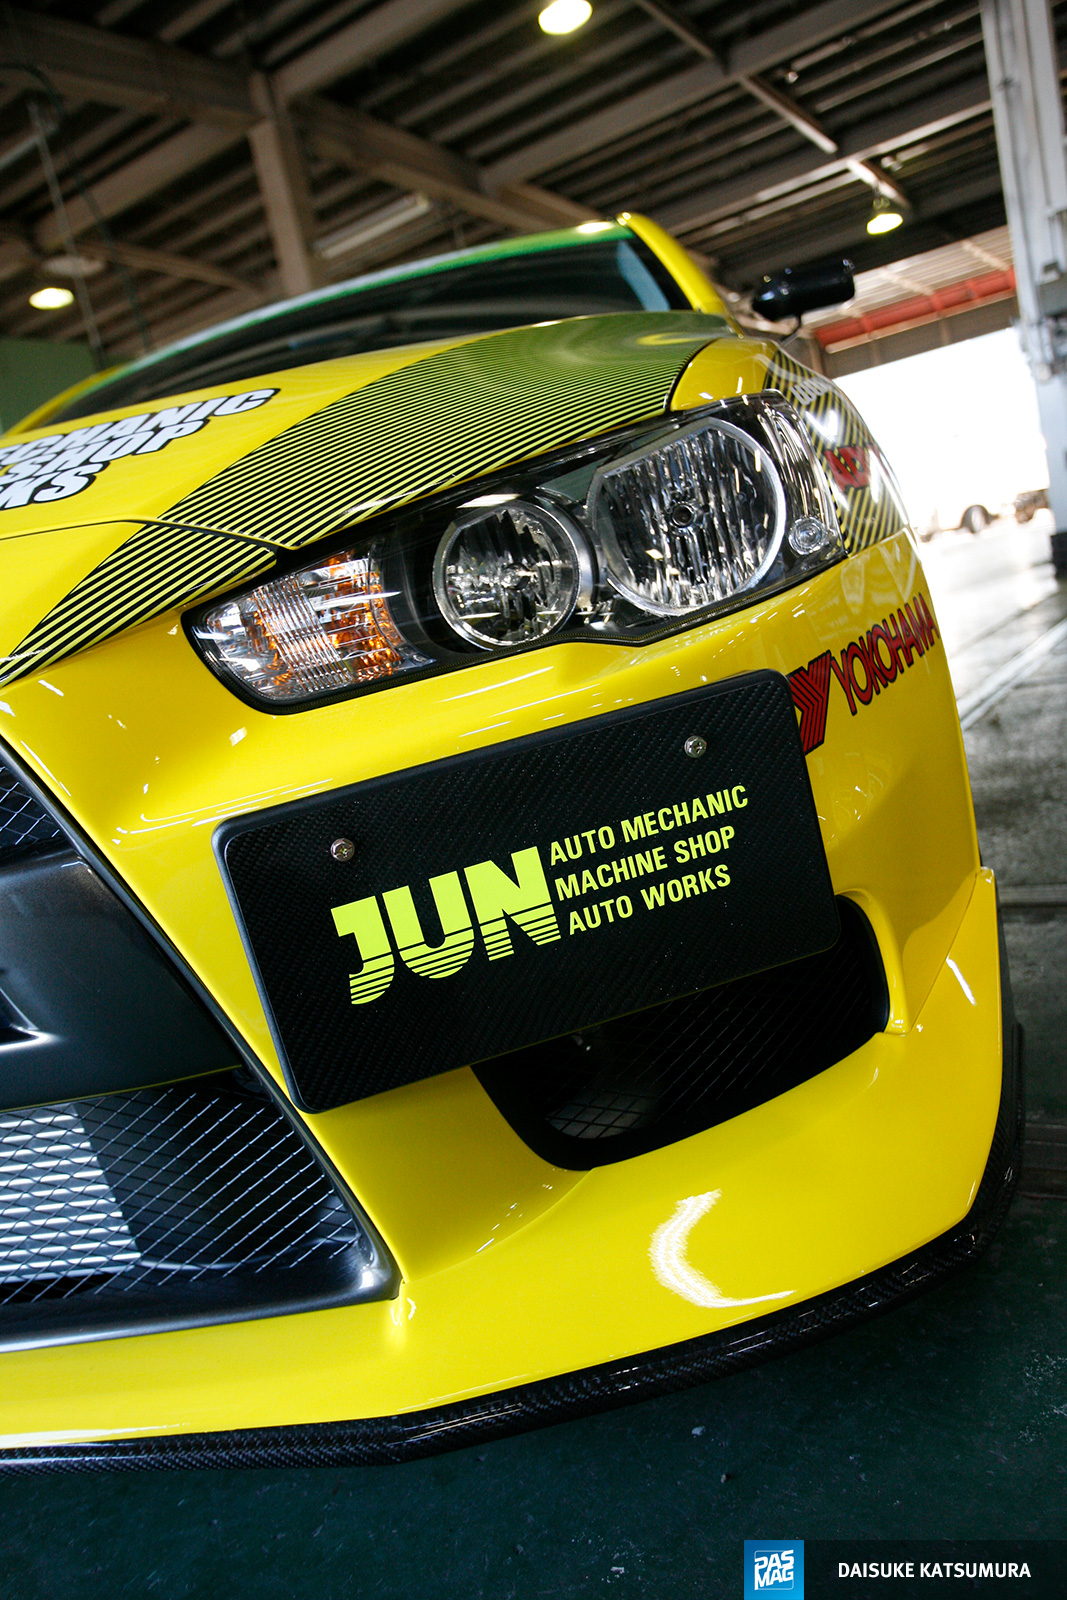 30 JUN Auto Mechanic 2008 Mitsubishi Lancer Evolution X RS pasmag